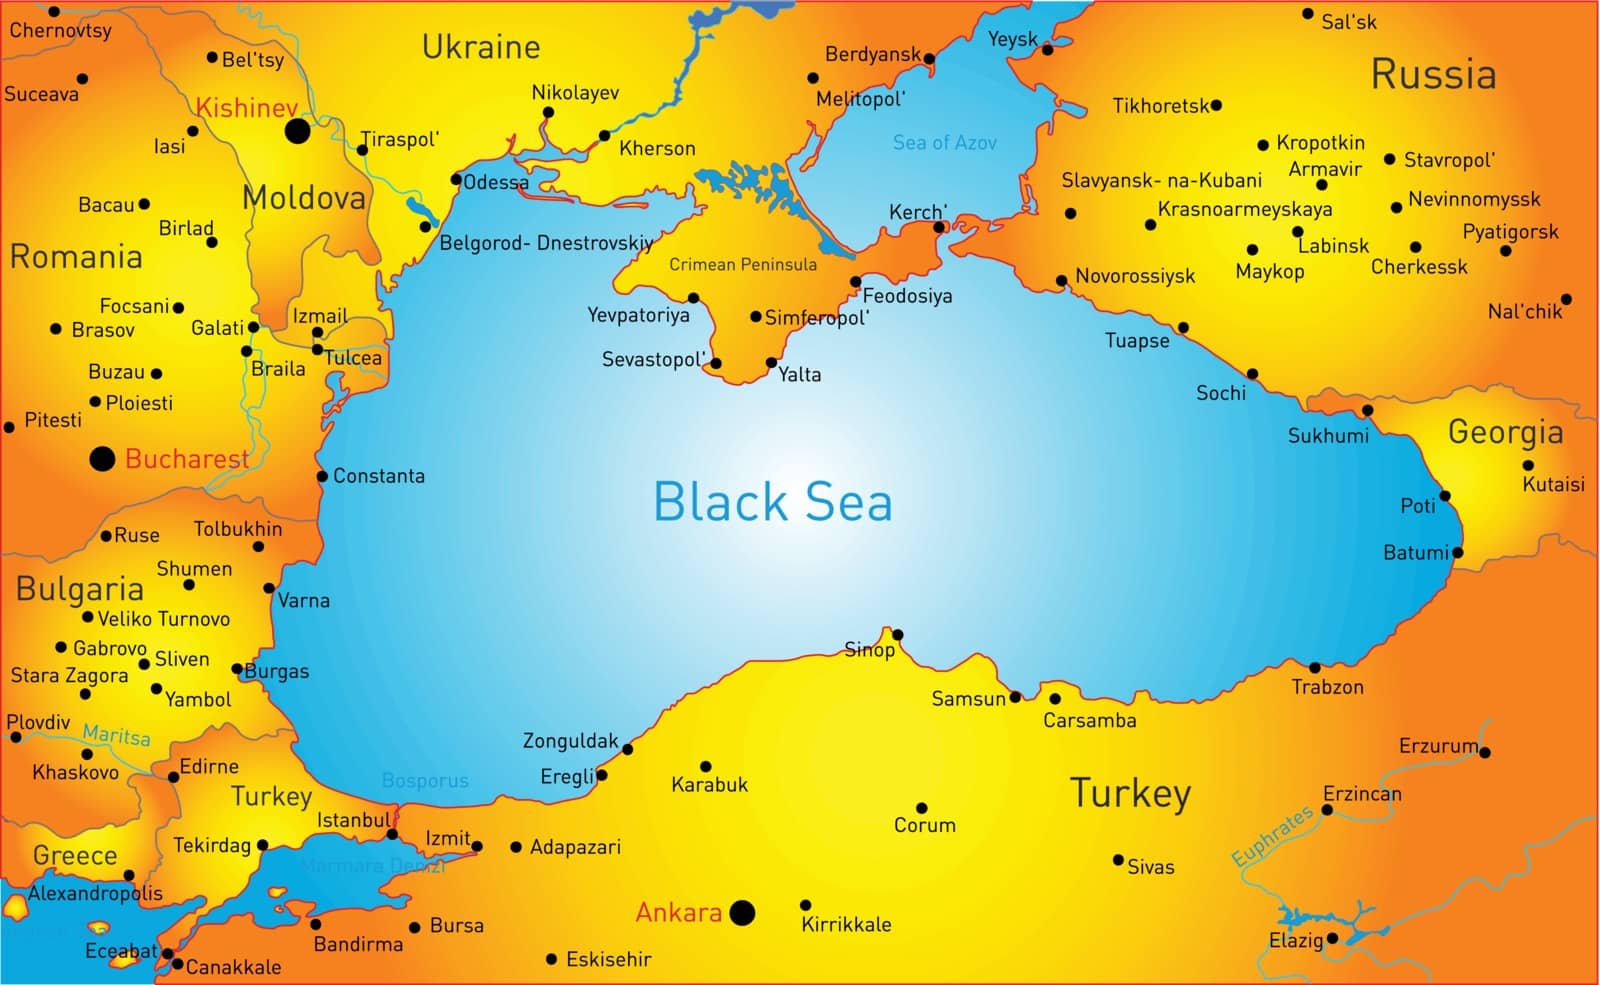 Vector map of Black sea region